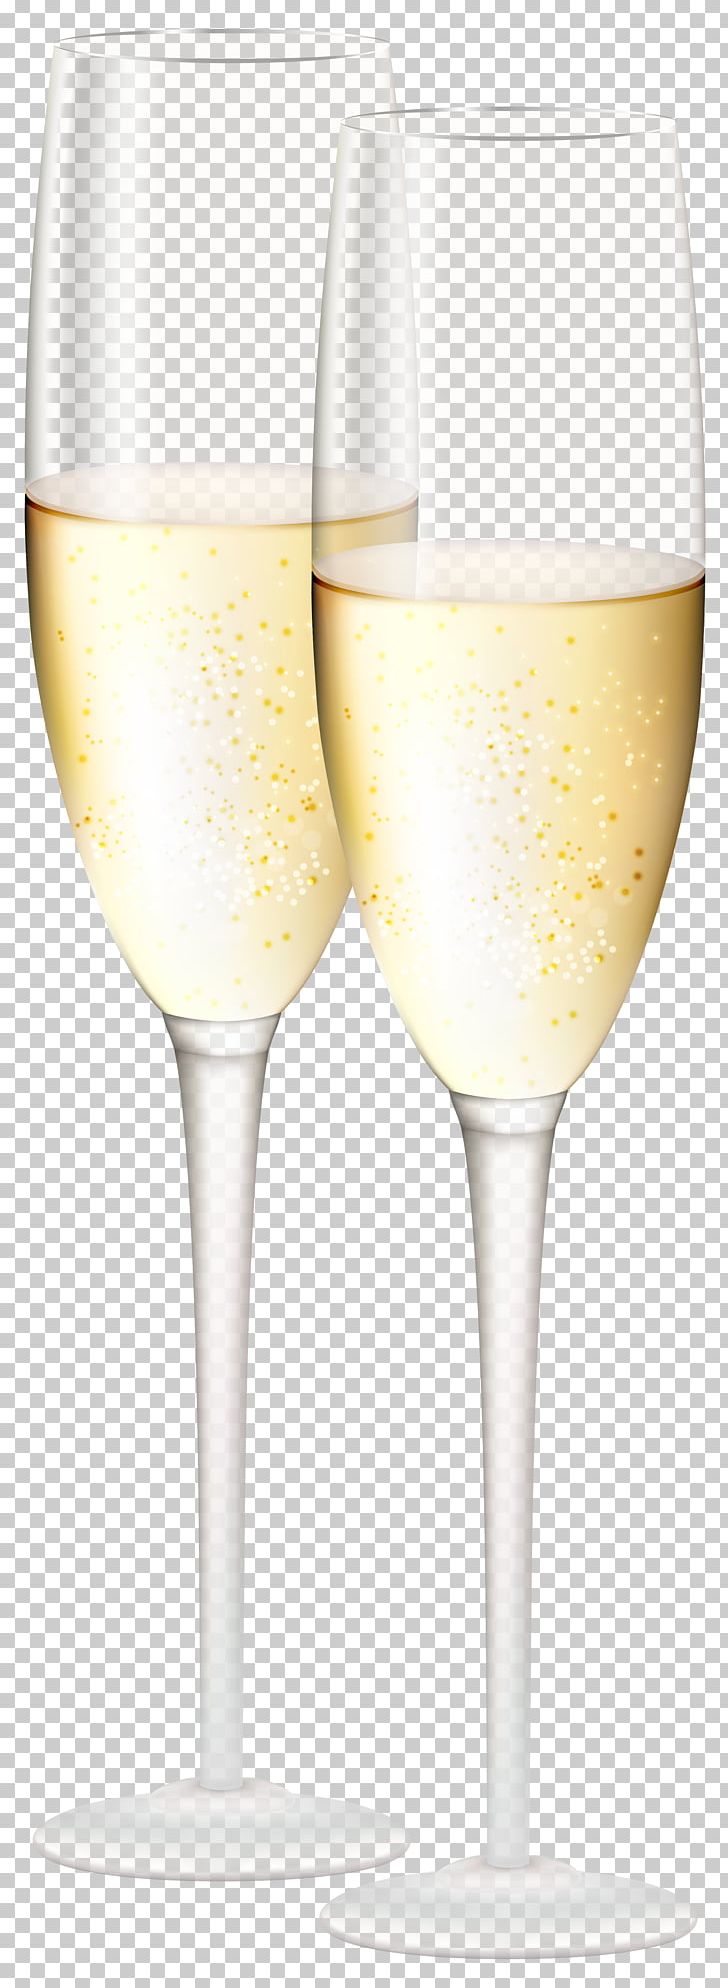 White Wine Champagne Glass Cocktail Wine Glass PNG, Clipart, Beer Glass, Bottle, Champagne, Champagne Cocktail, Champagne Glass Free PNG Download